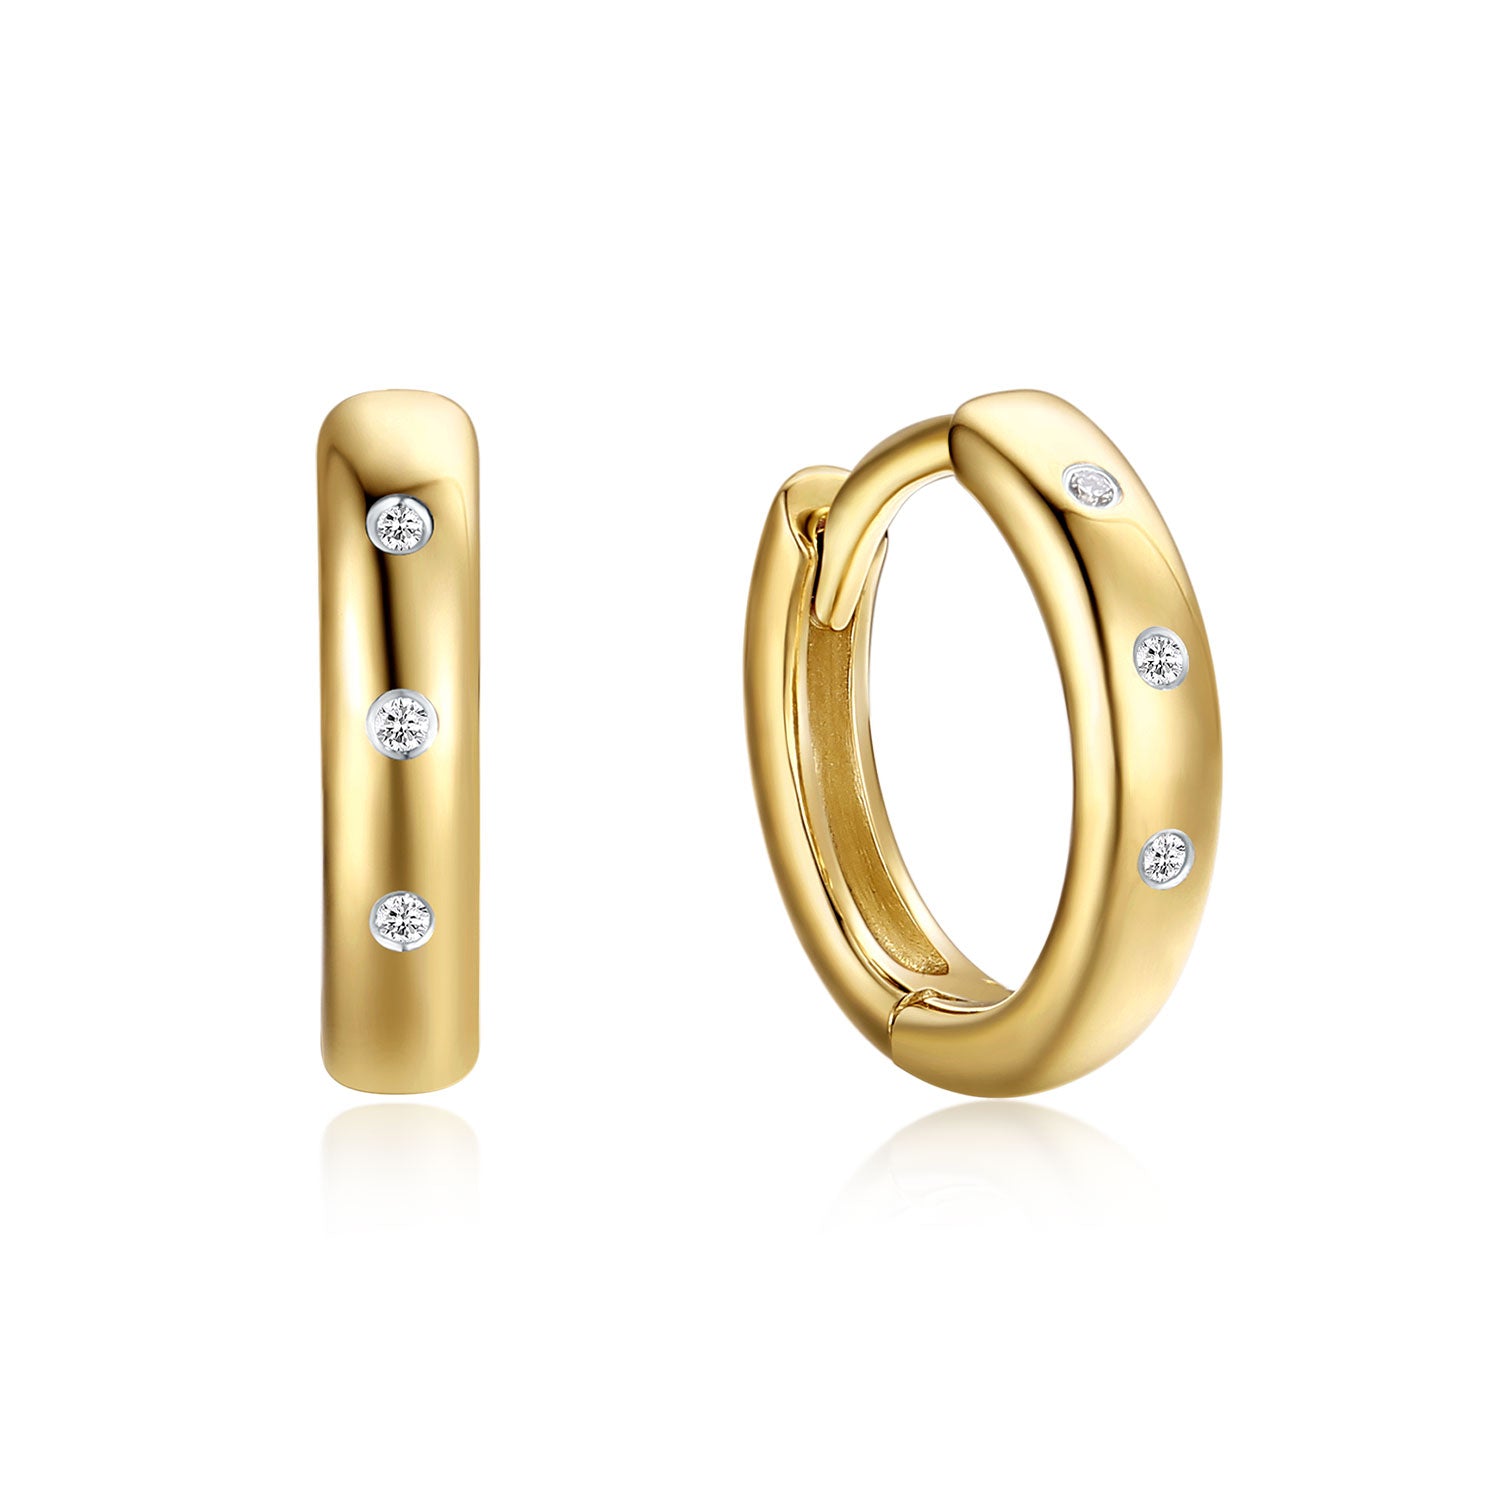 Buy Fresh Vibes Golden Round Multi Loop Earrings for Women | Western Style  Gold Metallic Hoop Earring at Amazon.in